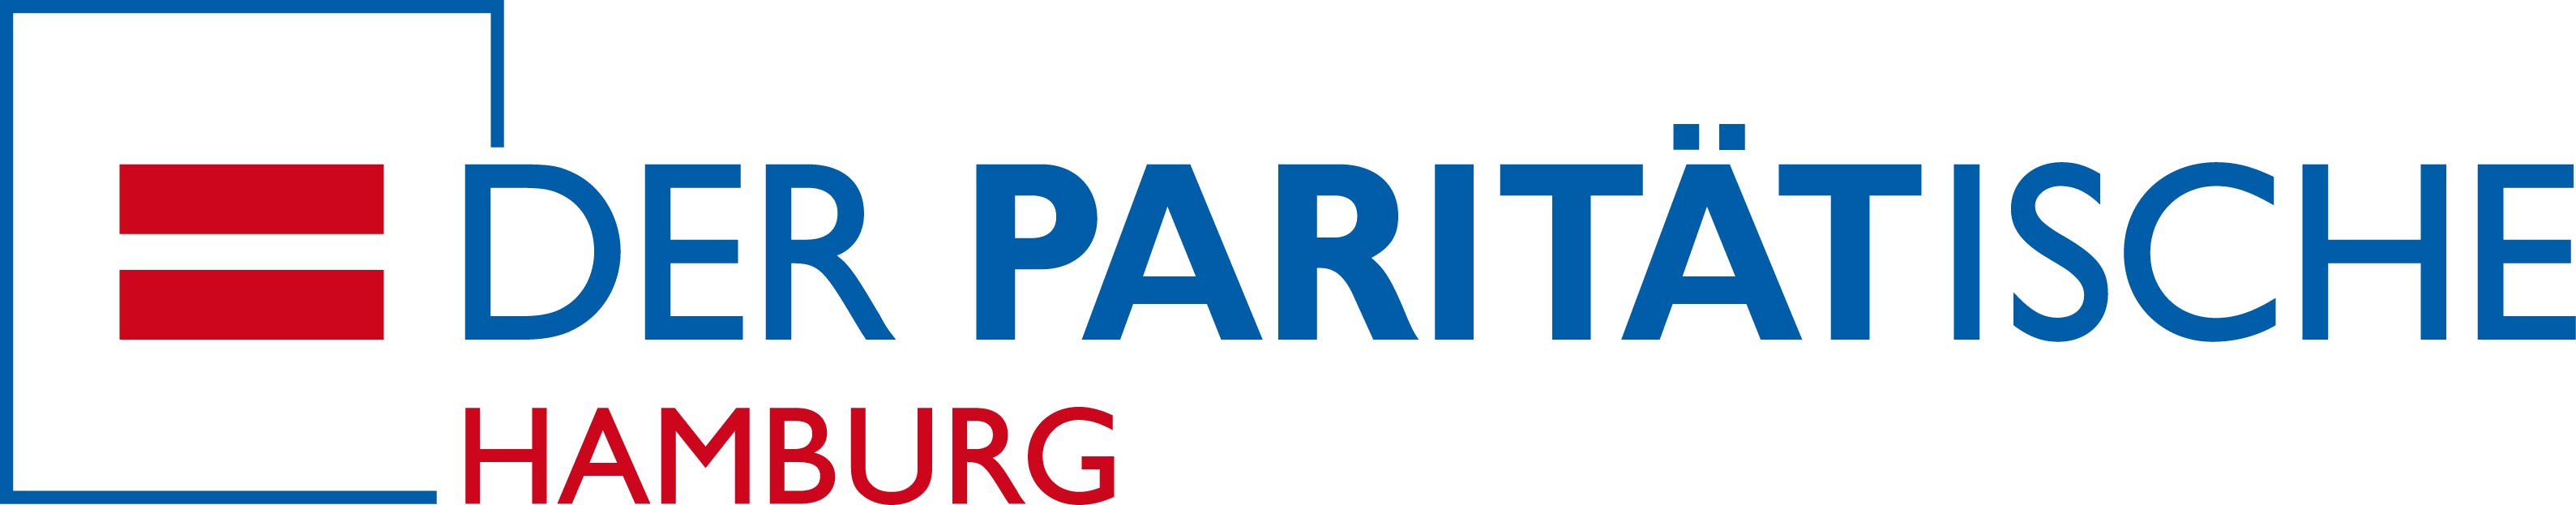 Parität Logo_Hamburg FINAL